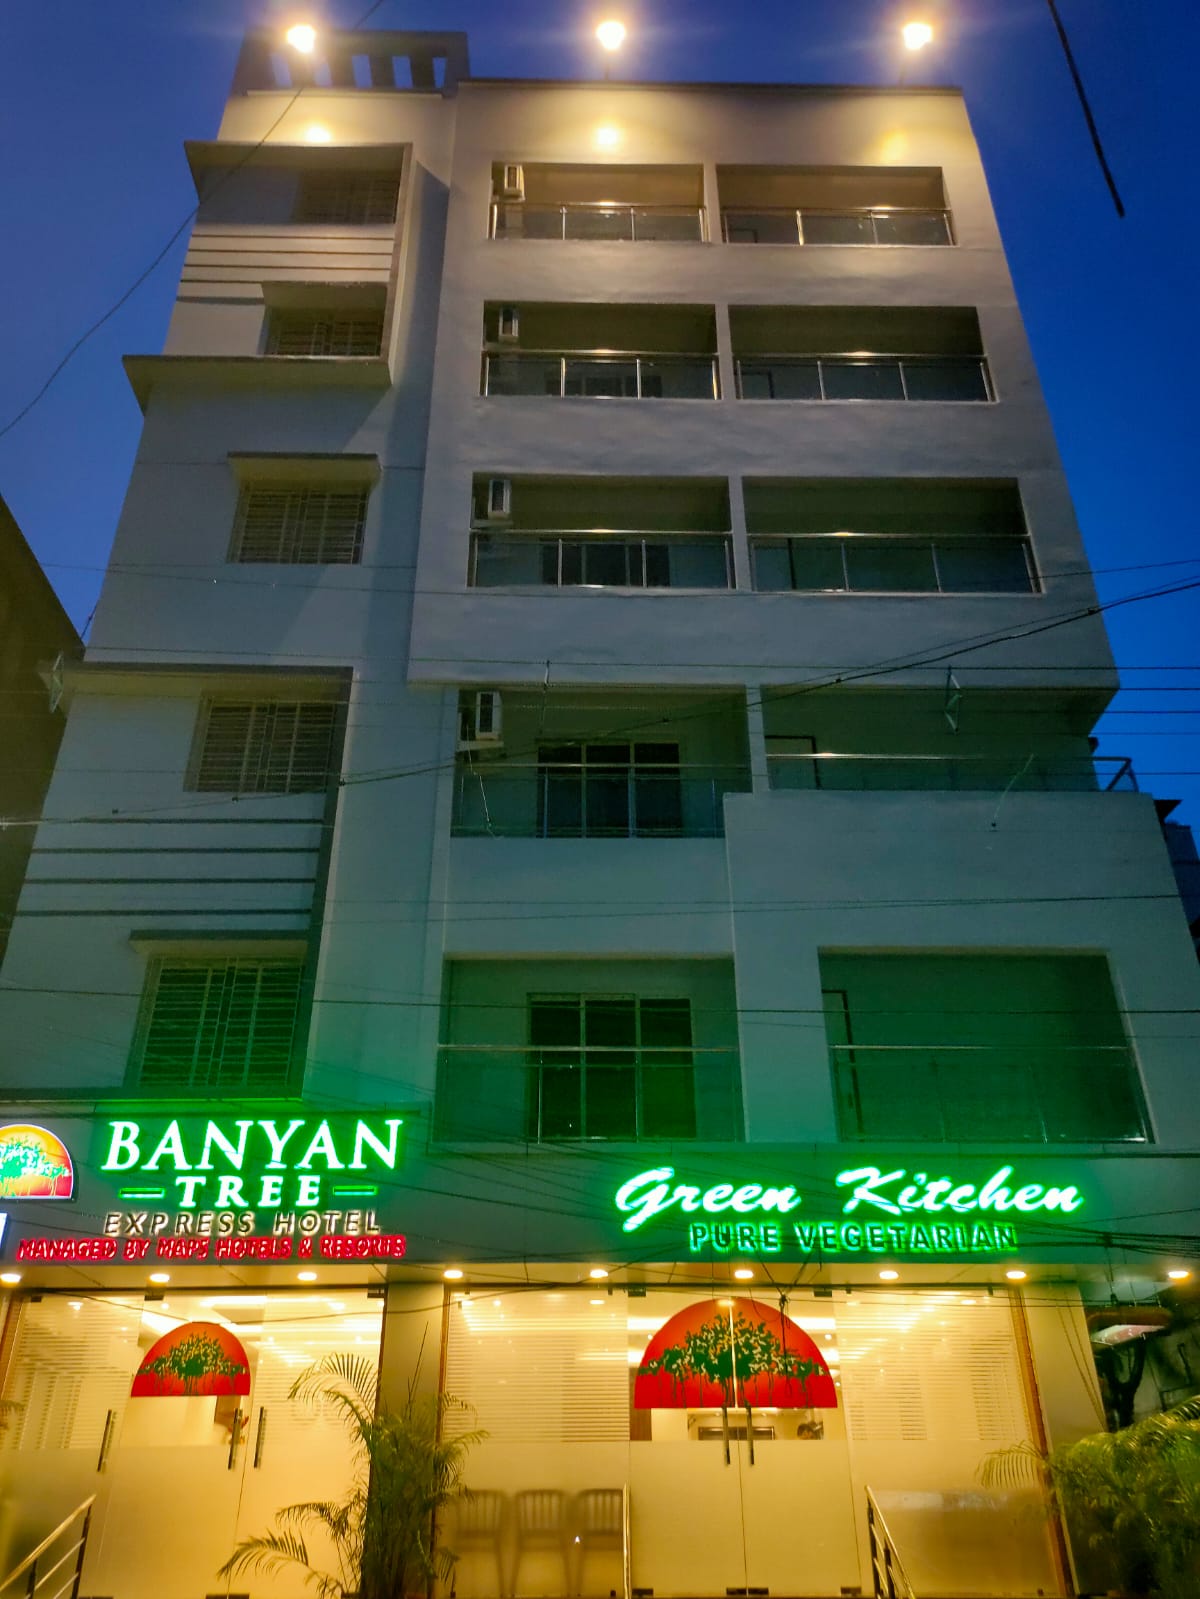 Banyan Tree Express Hotel